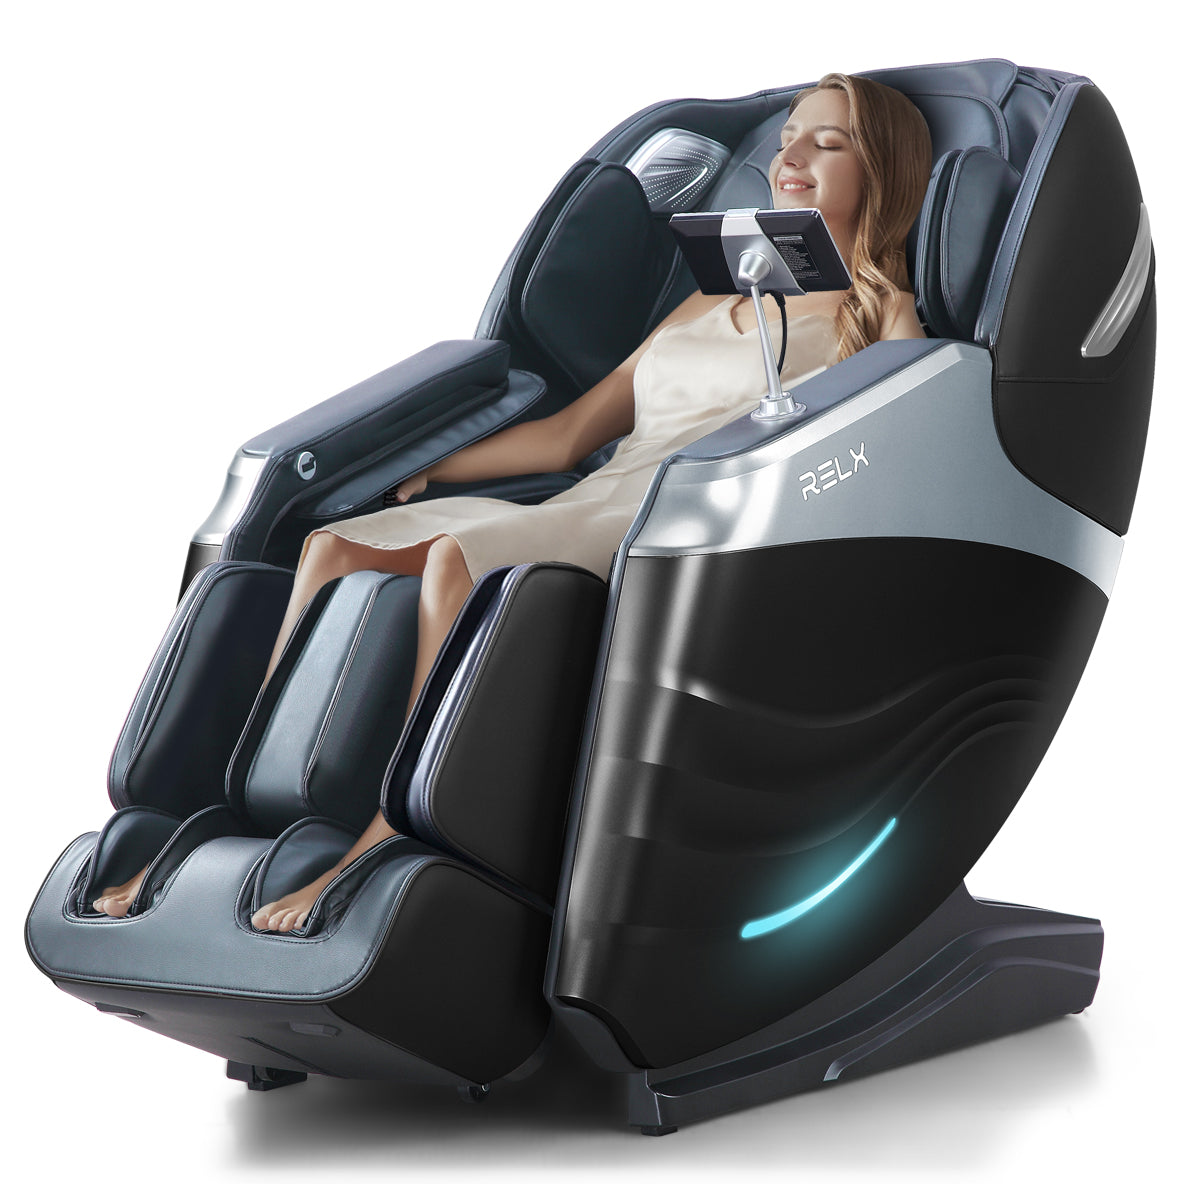 Load video: RELX Mars Pro Massage Chair